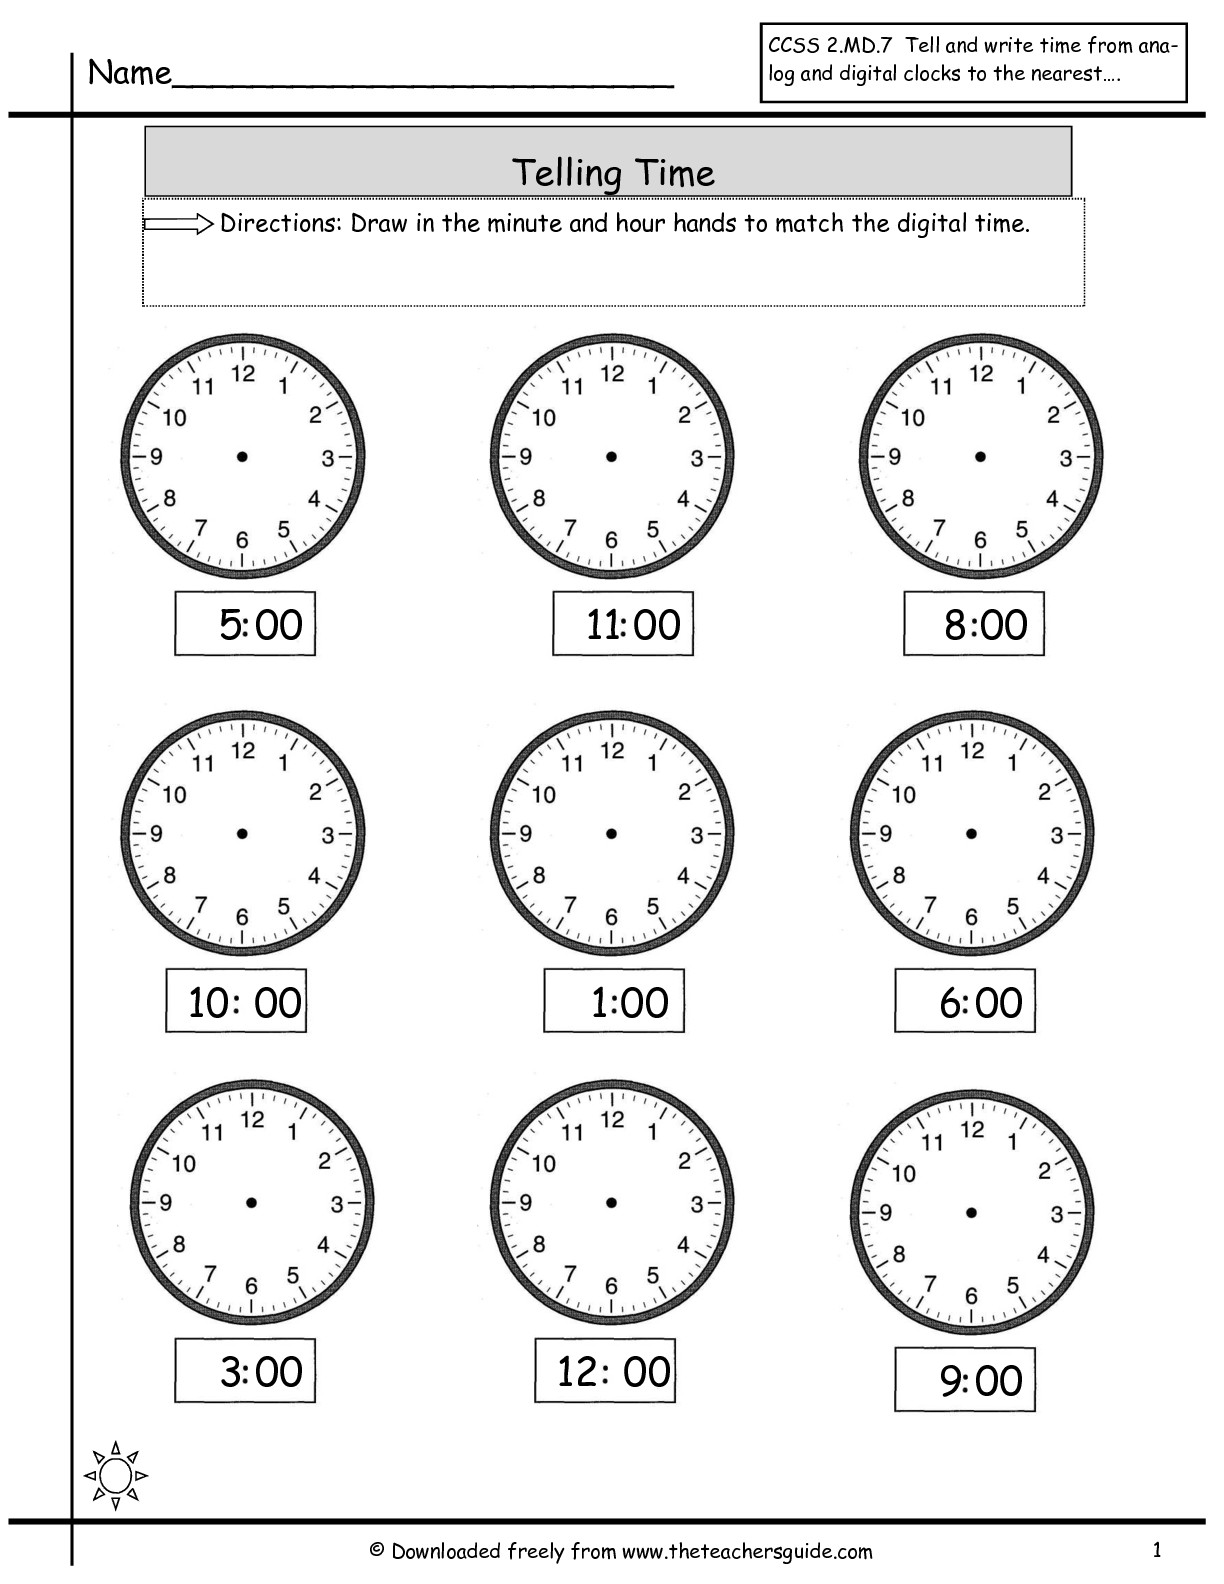 vocabulary-set-2-kindergarten-telling-time-2nd-grade-math-worksheets